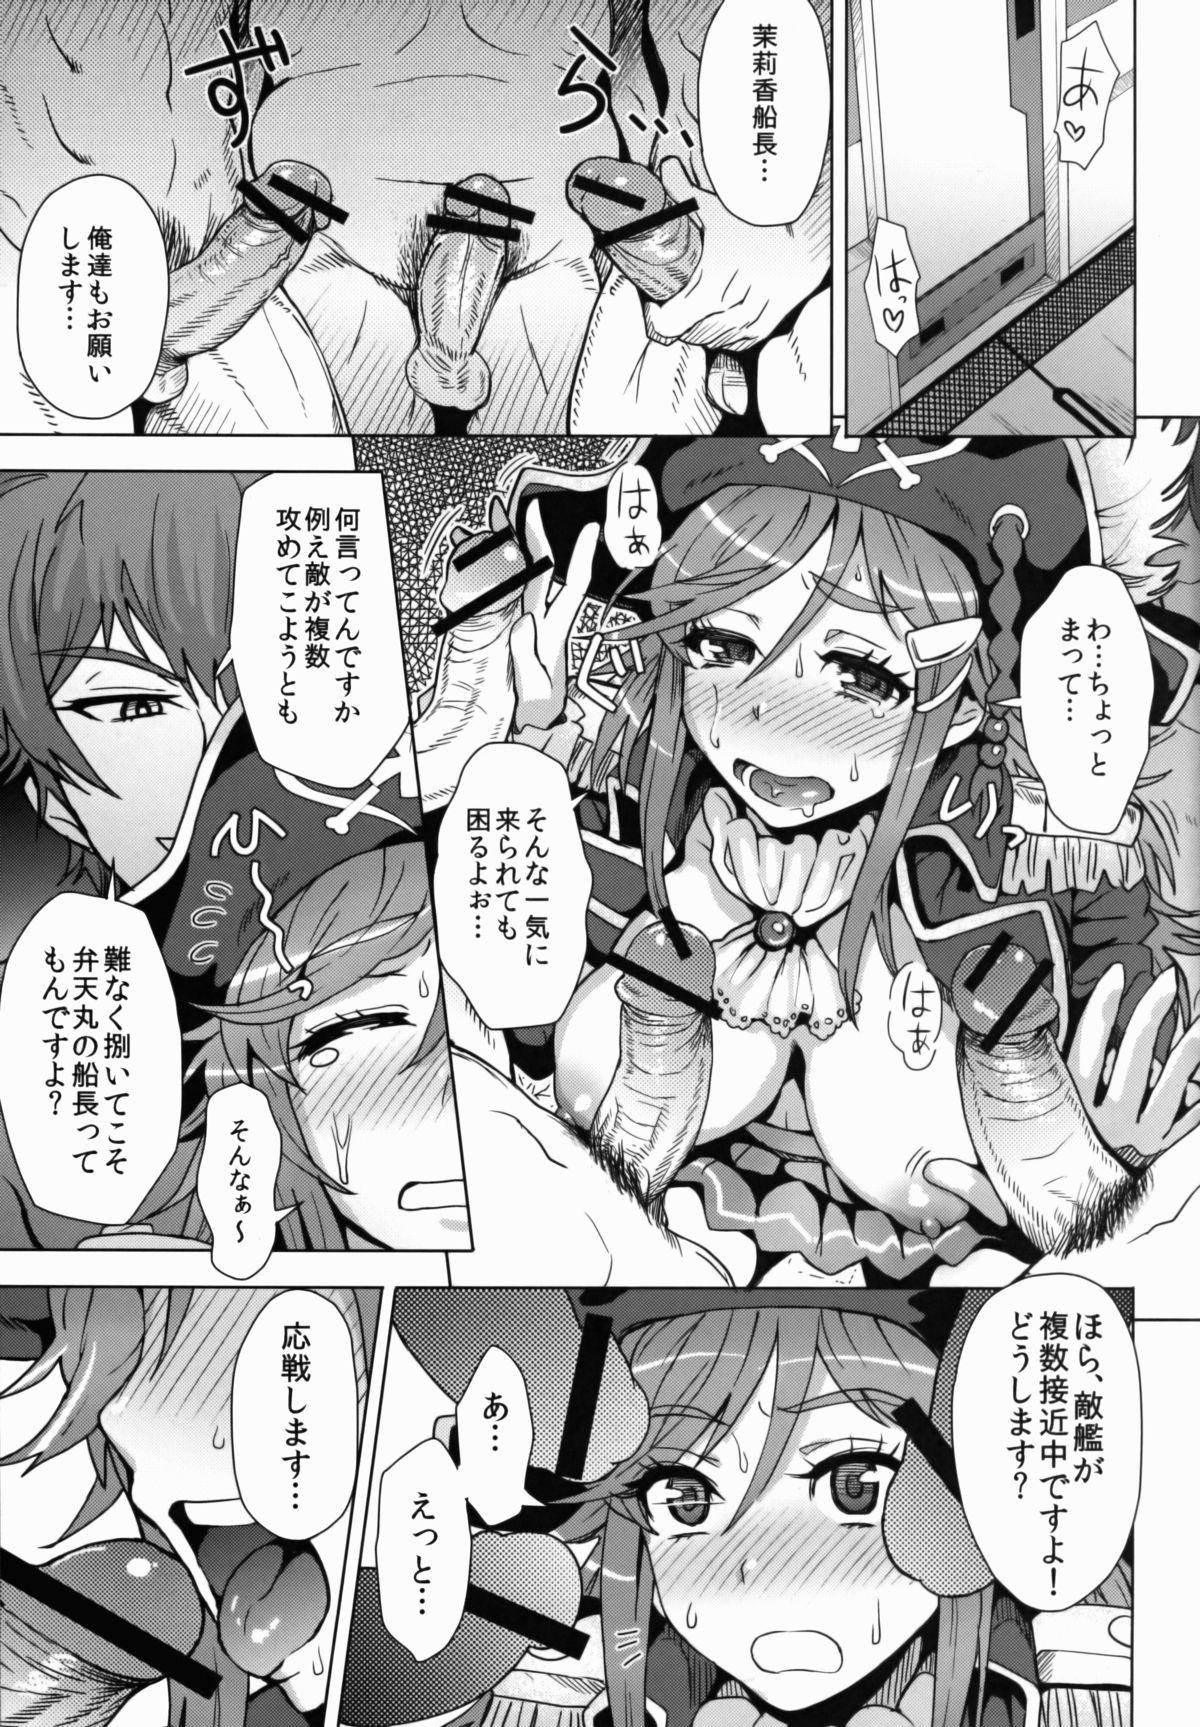 Nylons CHIAKIchang★HELP!! - Mouretsu pirates Fishnet - Page 6